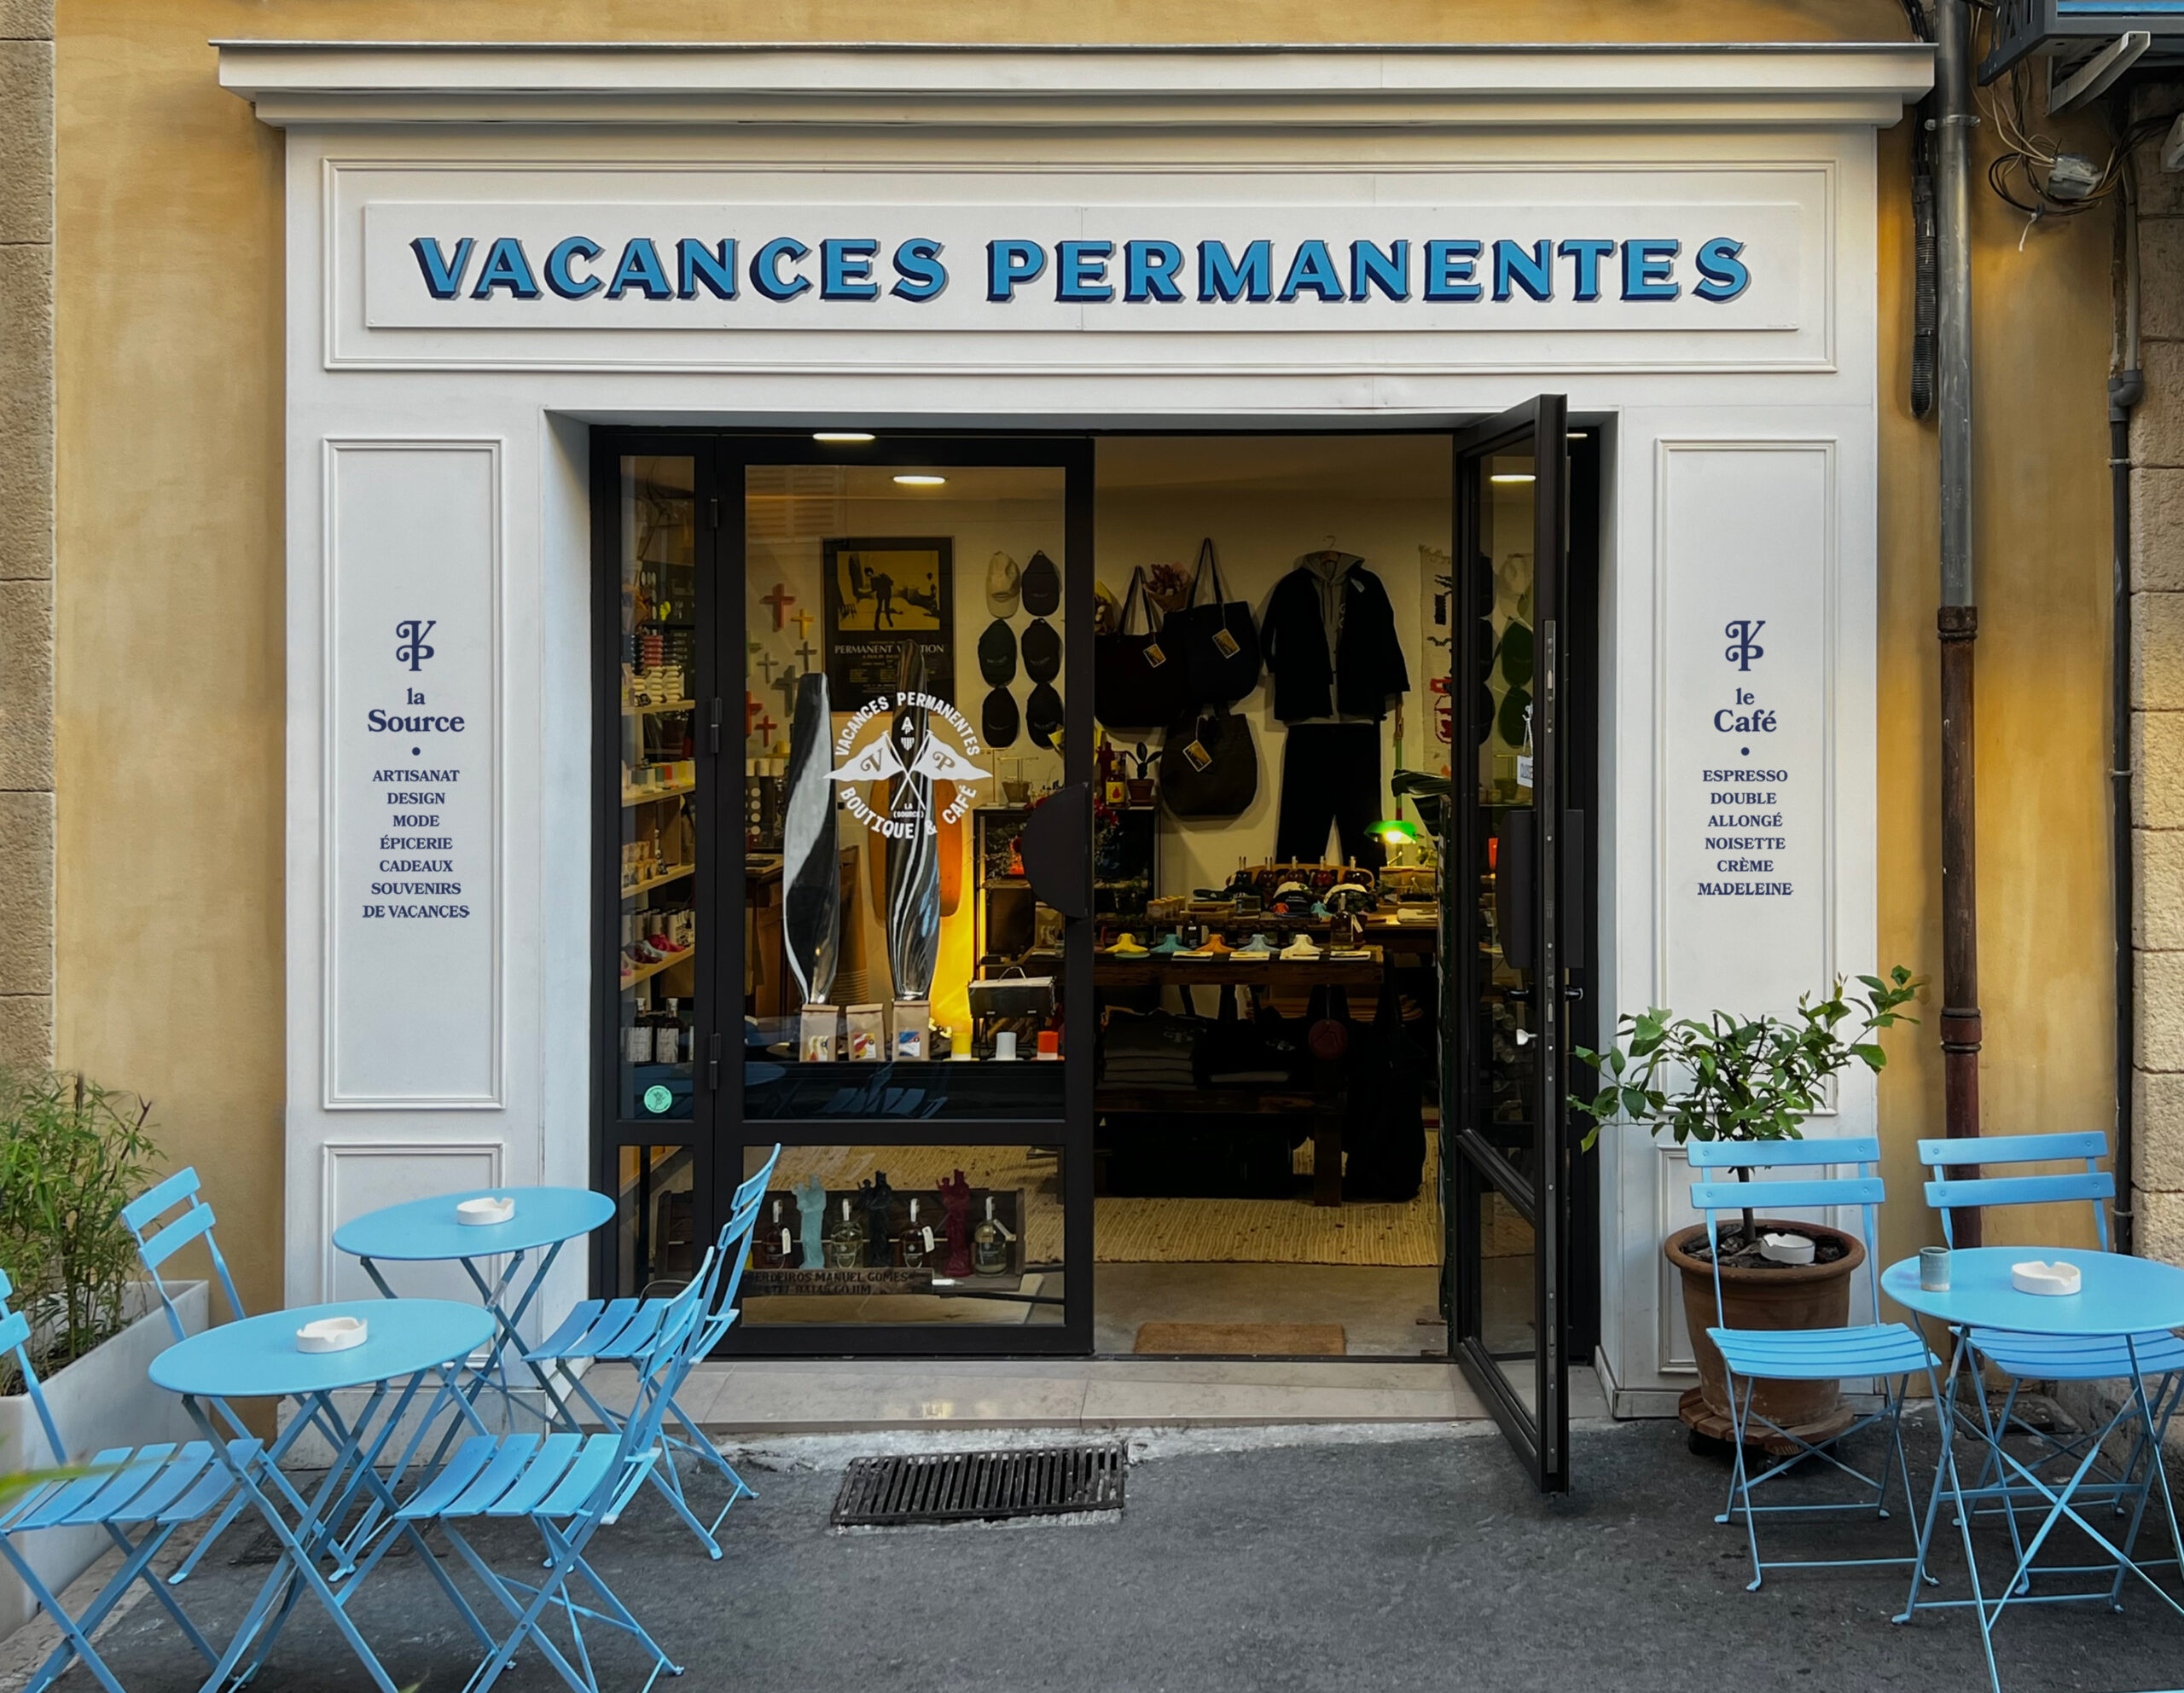 Vacances permanentes concept store